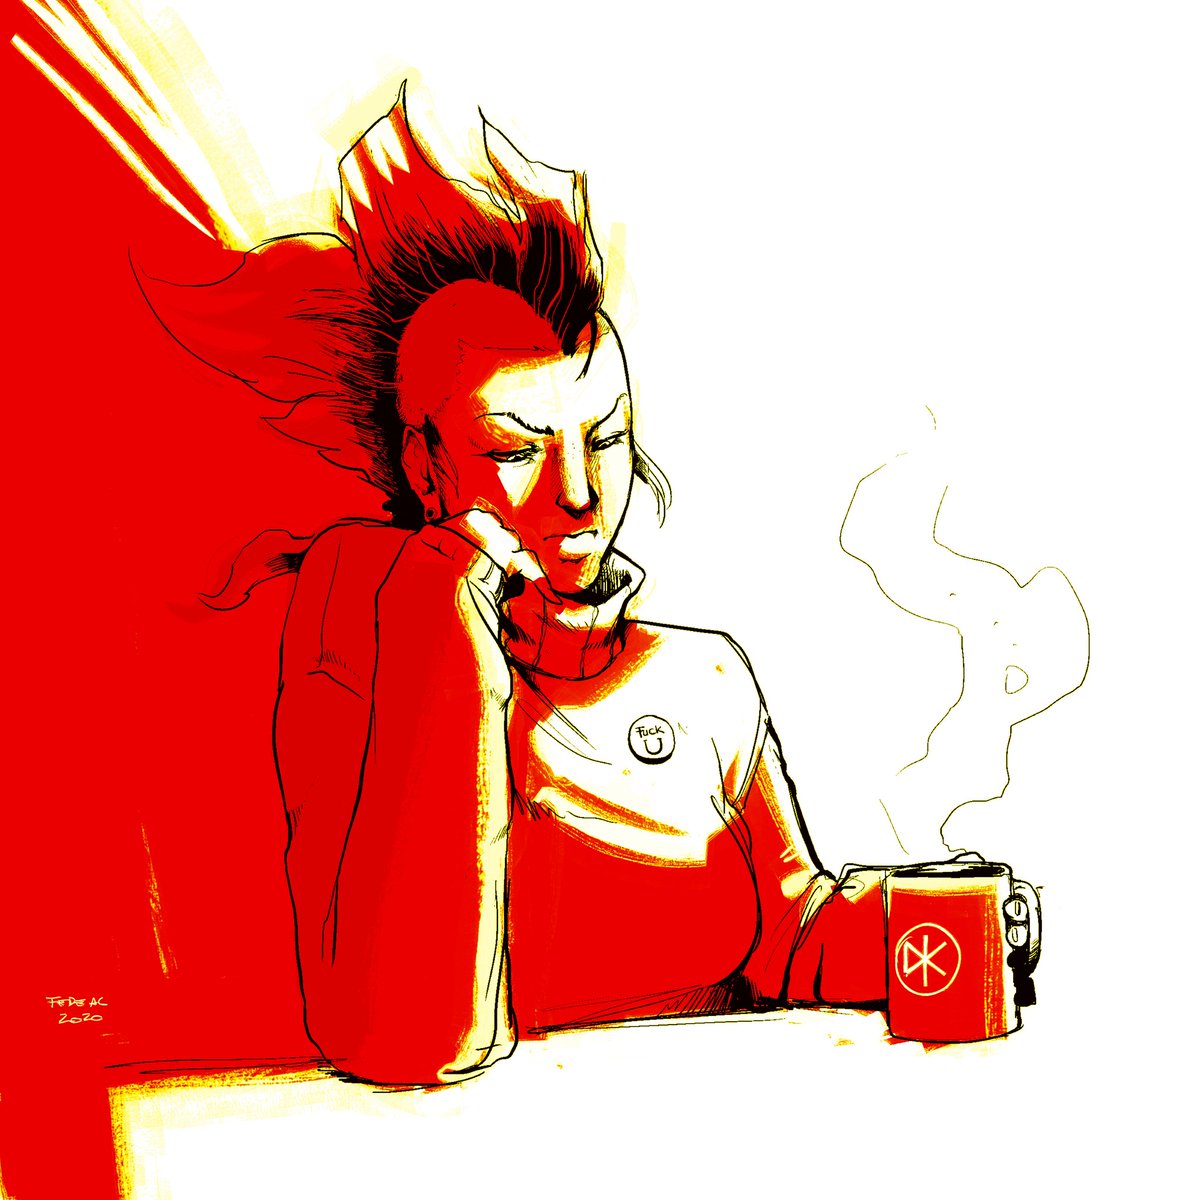 Punky
#punkrock #punk #mohawk #mohawkgirl #riotgrrrl #riot #punkgirl #punkwomen #punky #fyou #deadkennedys @DeadKennedys #bored #illustration #ilustraciondigital #digitalart #dibujodigital #digitalillustration #dibujo #arte #art #artwork #artist #coffee #coffemug #mug #cafe